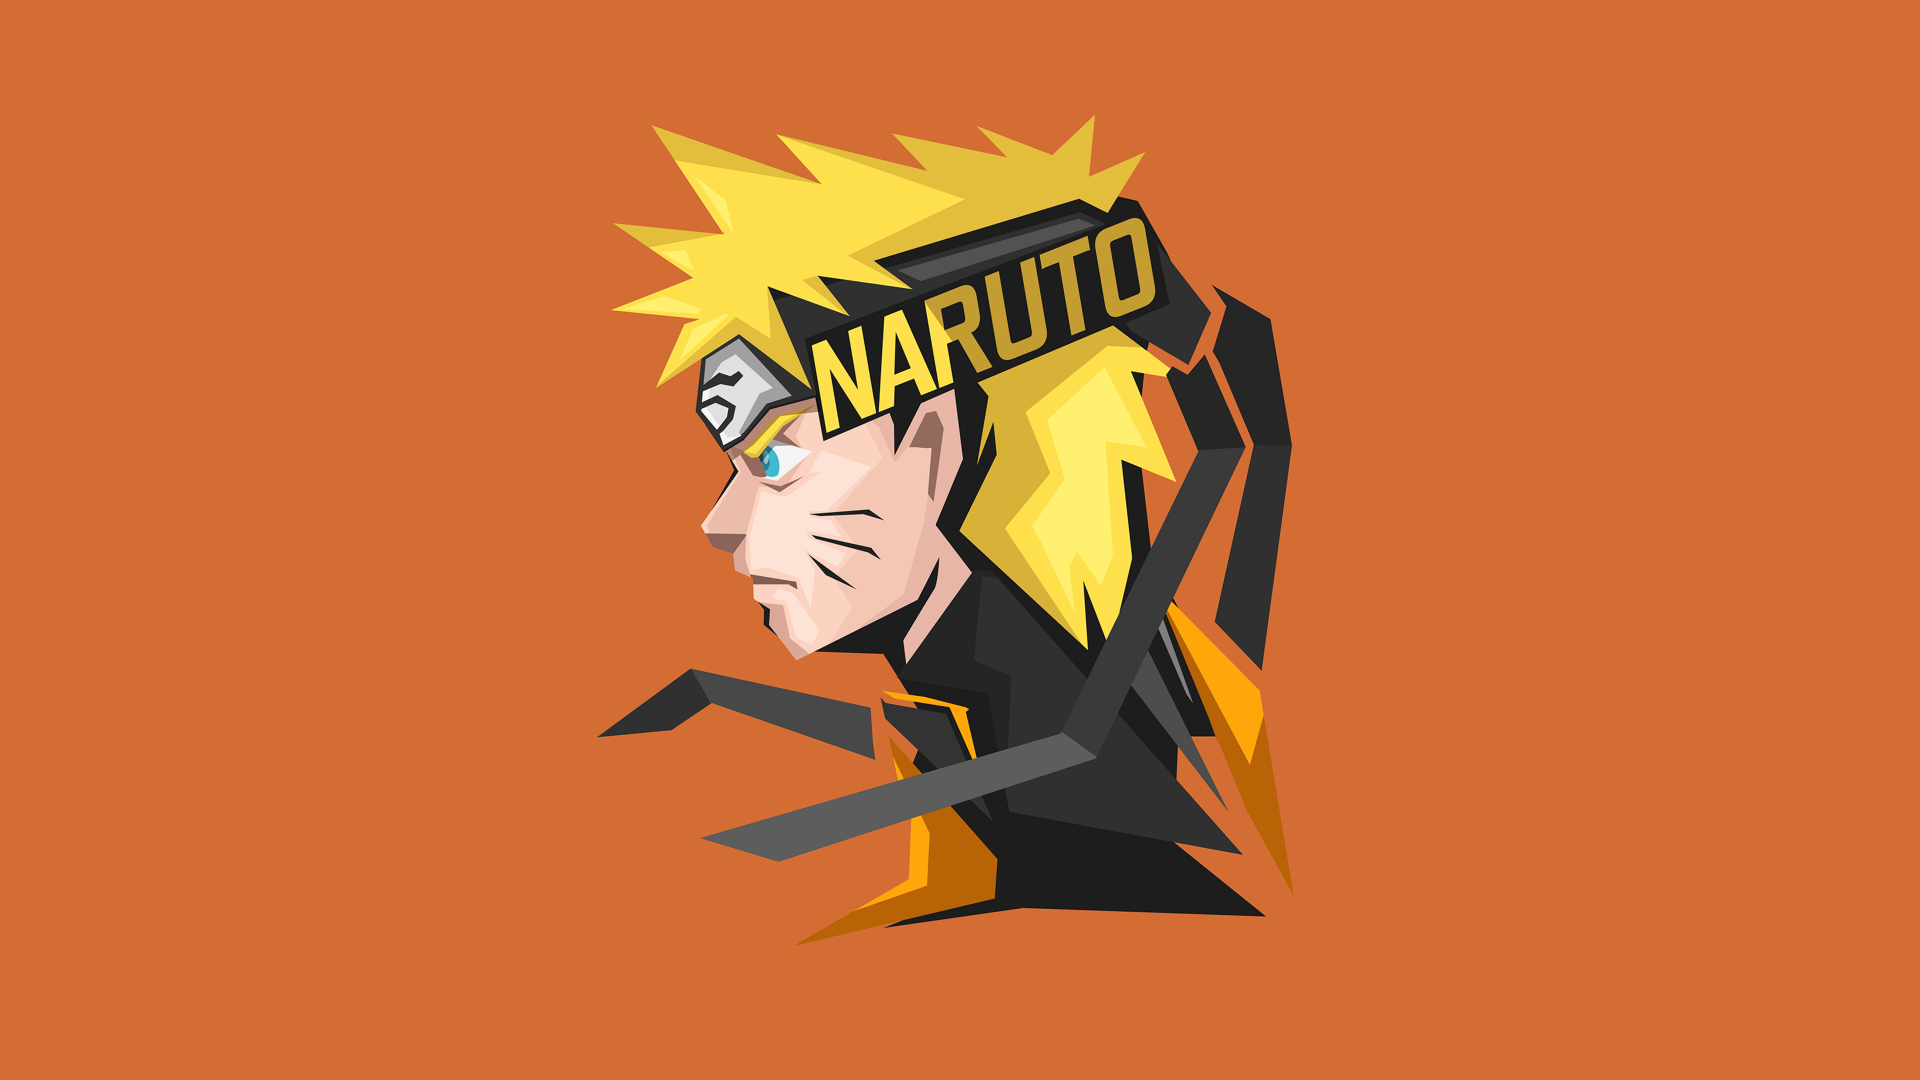 7680x4320 Naruto Uzumaki by BossLogic Wallpaper Background Image. 